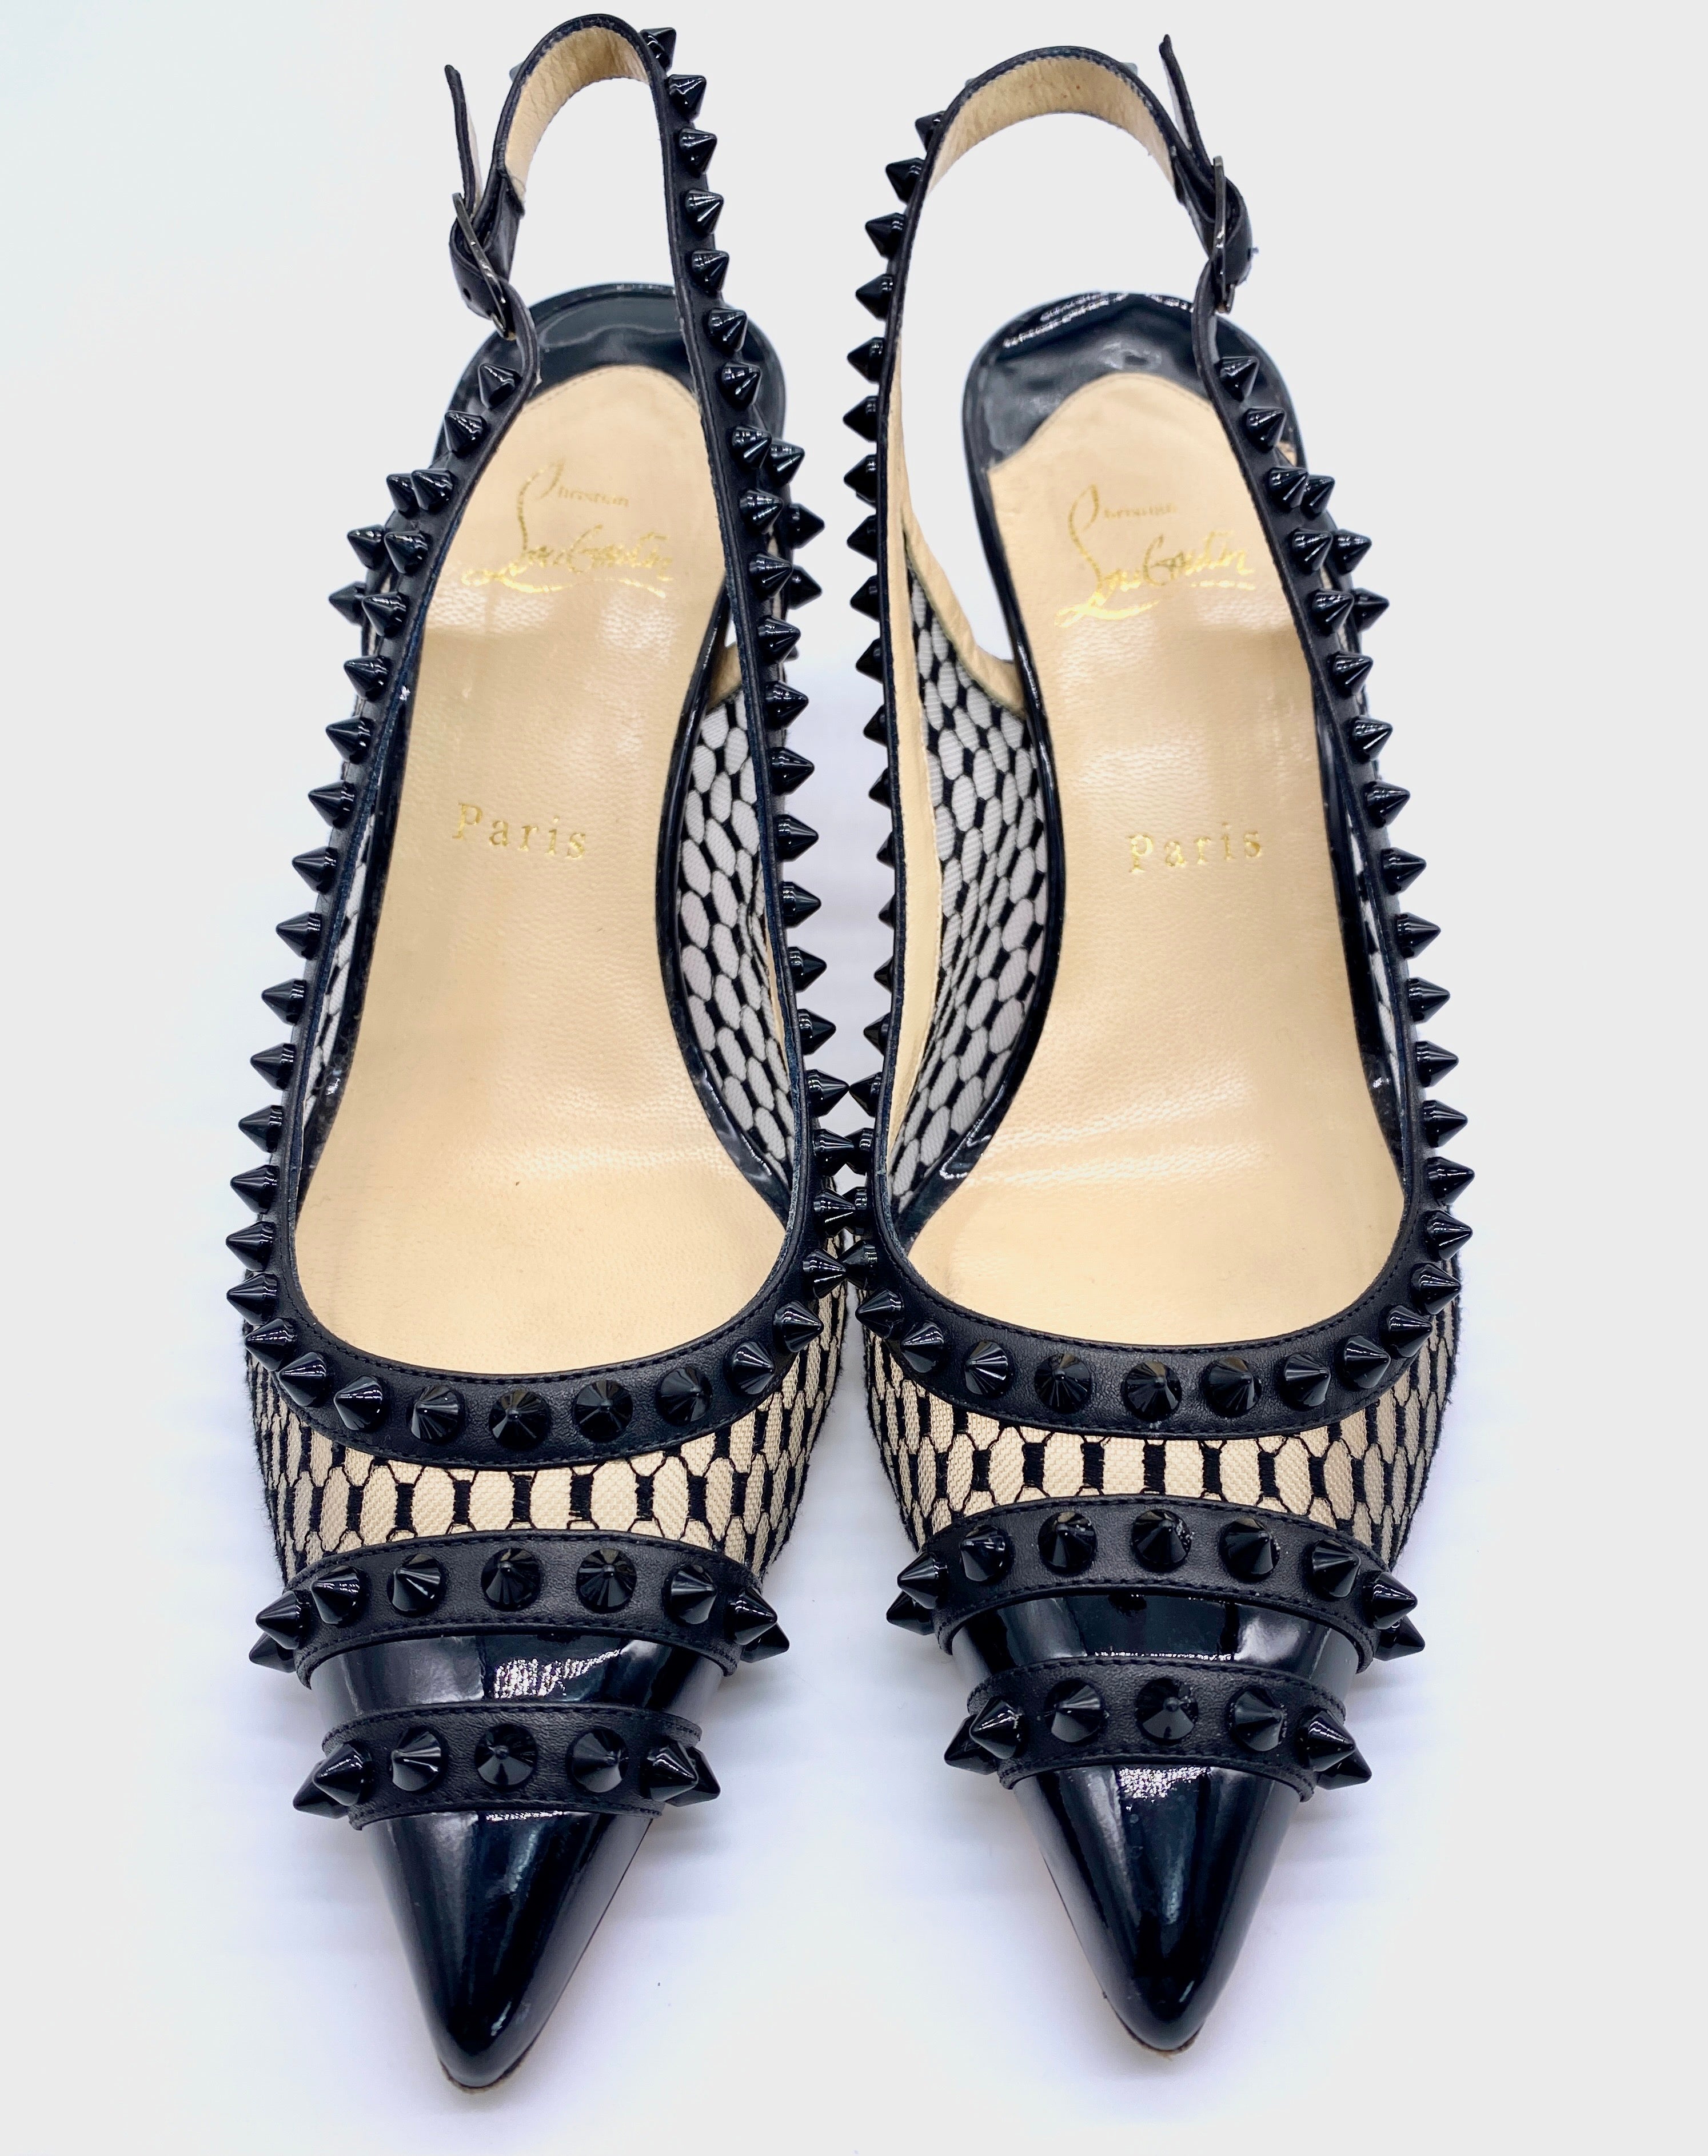 Christian Louboutin BILLY Studded Velvet Spiked Metallic Heel Pumps Shoes  $1495 | eBay